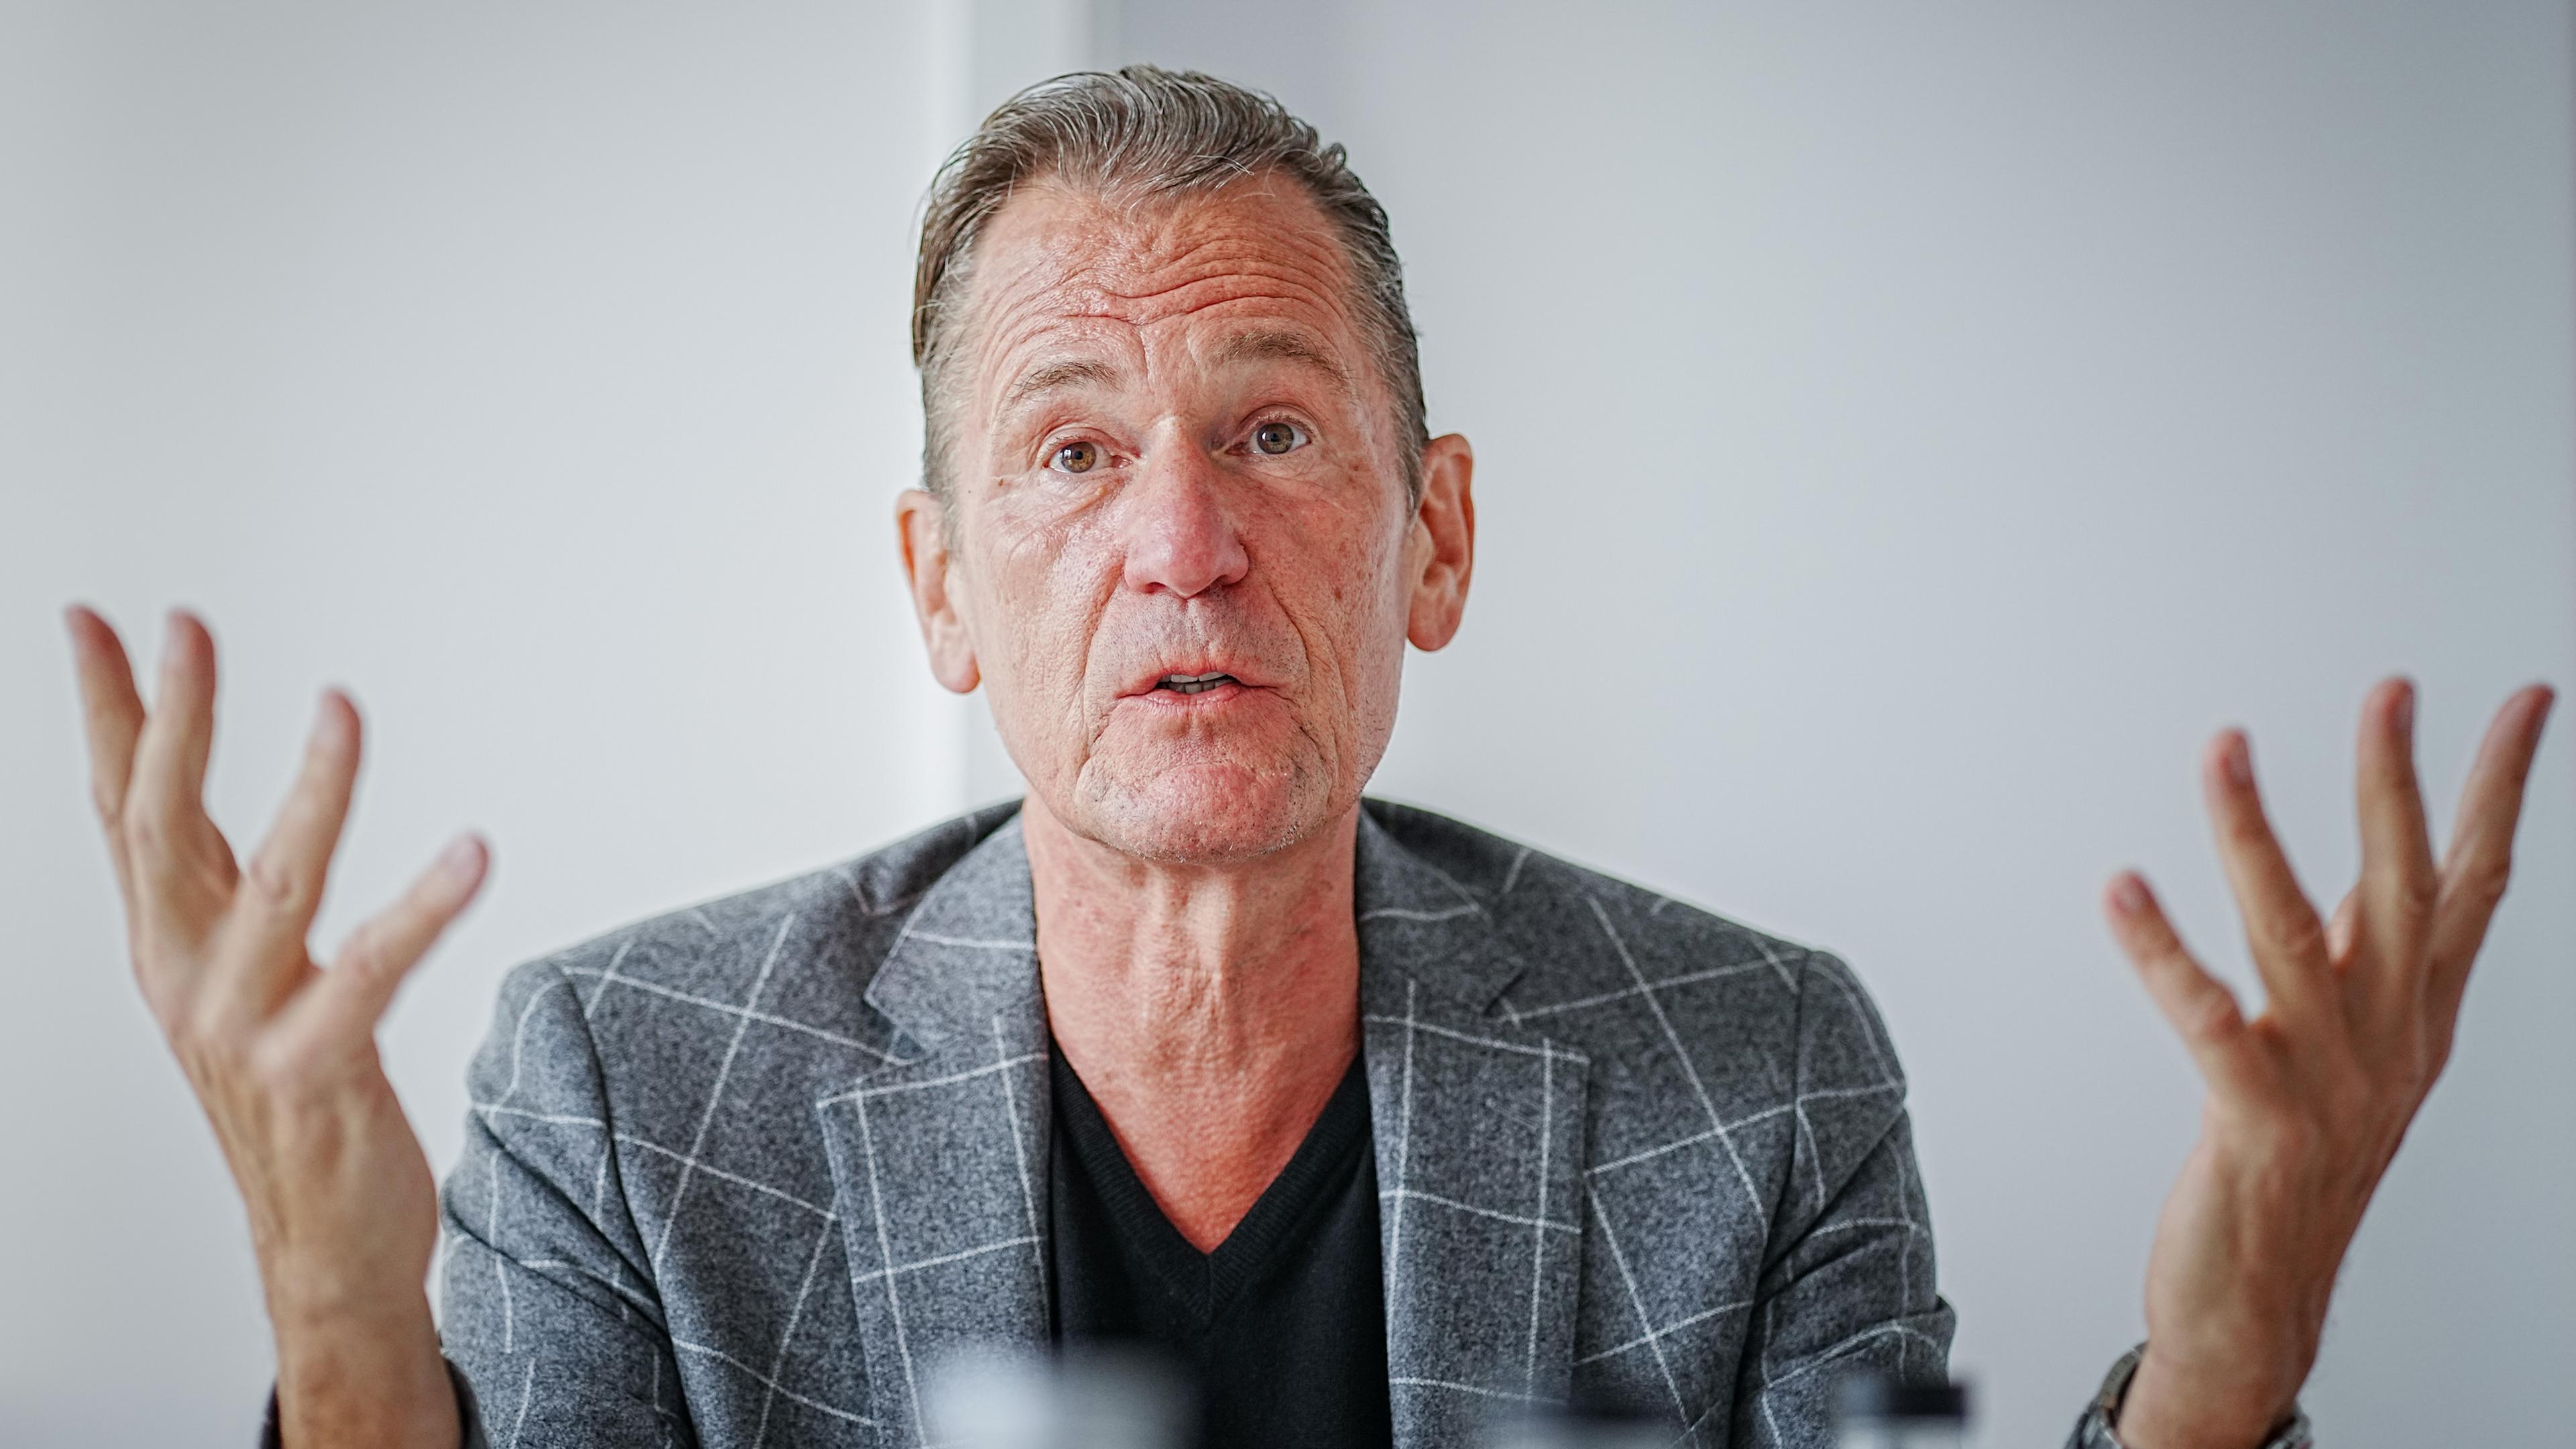 Vorstandsvorsitzender der Axel Springer SE Mathias Döpfner